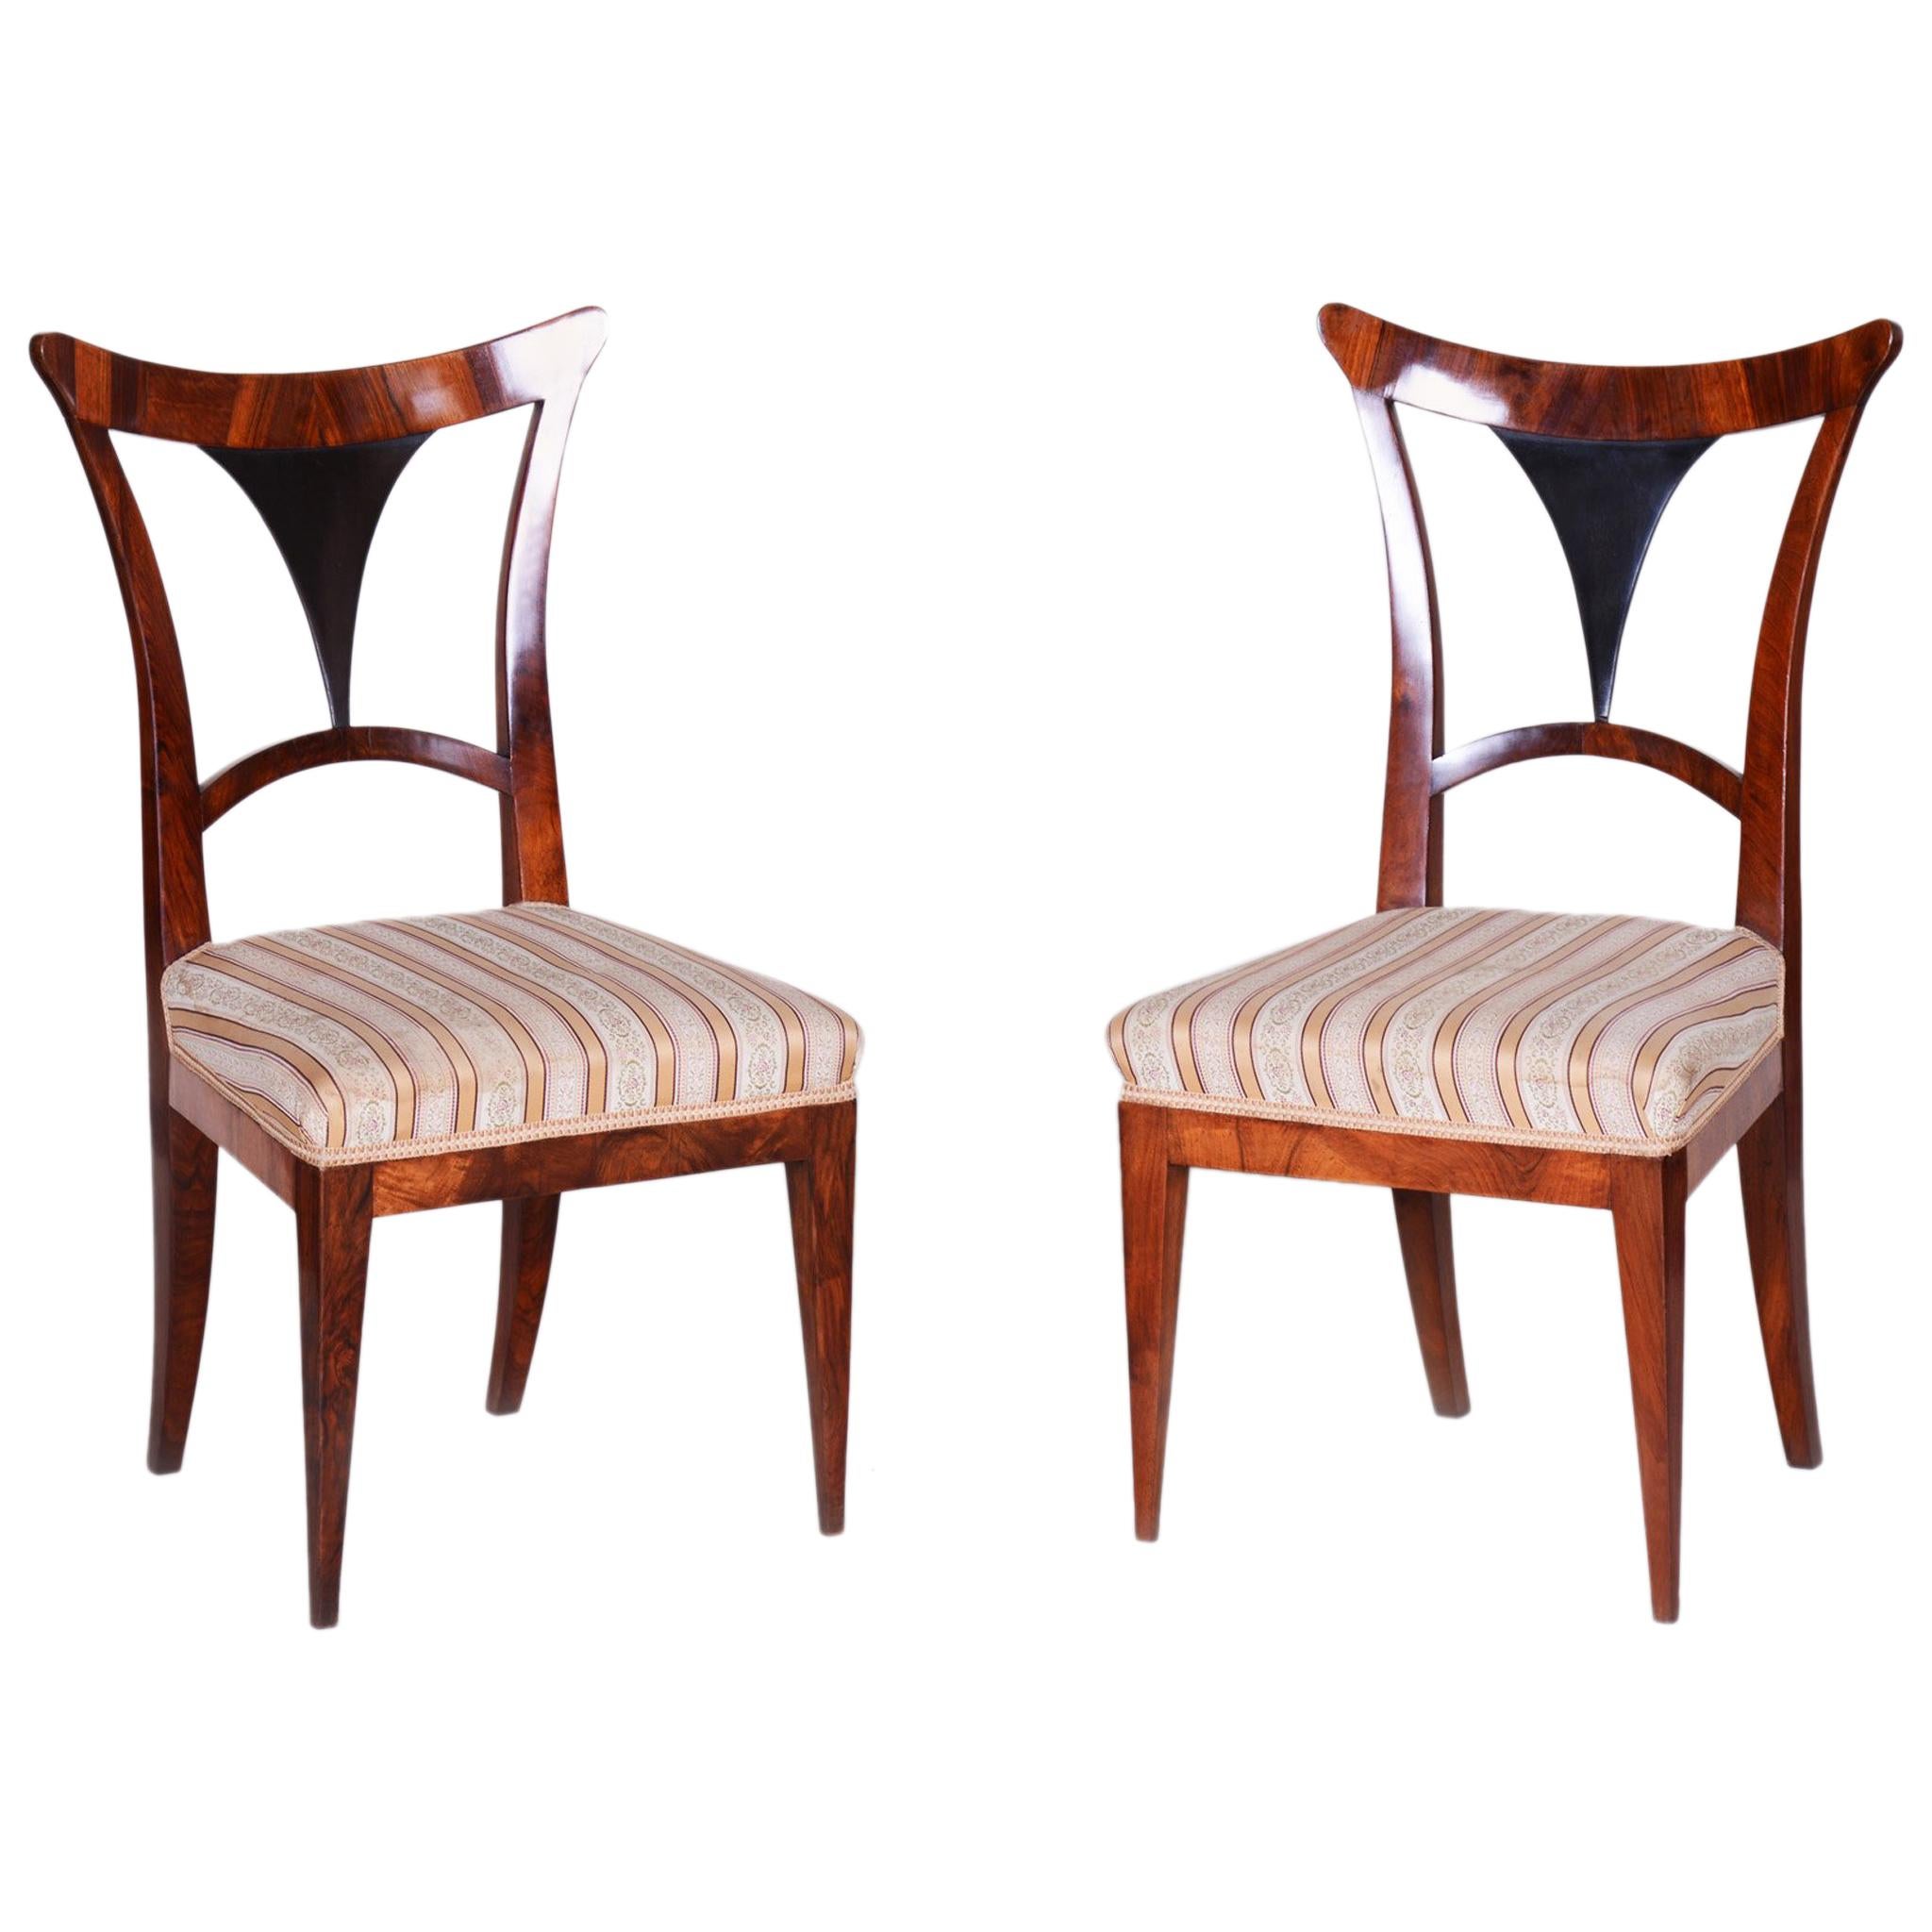 19th Century Pair of Walnut Austrian Biedermeier Chairs, Wien, Period 1810-1819